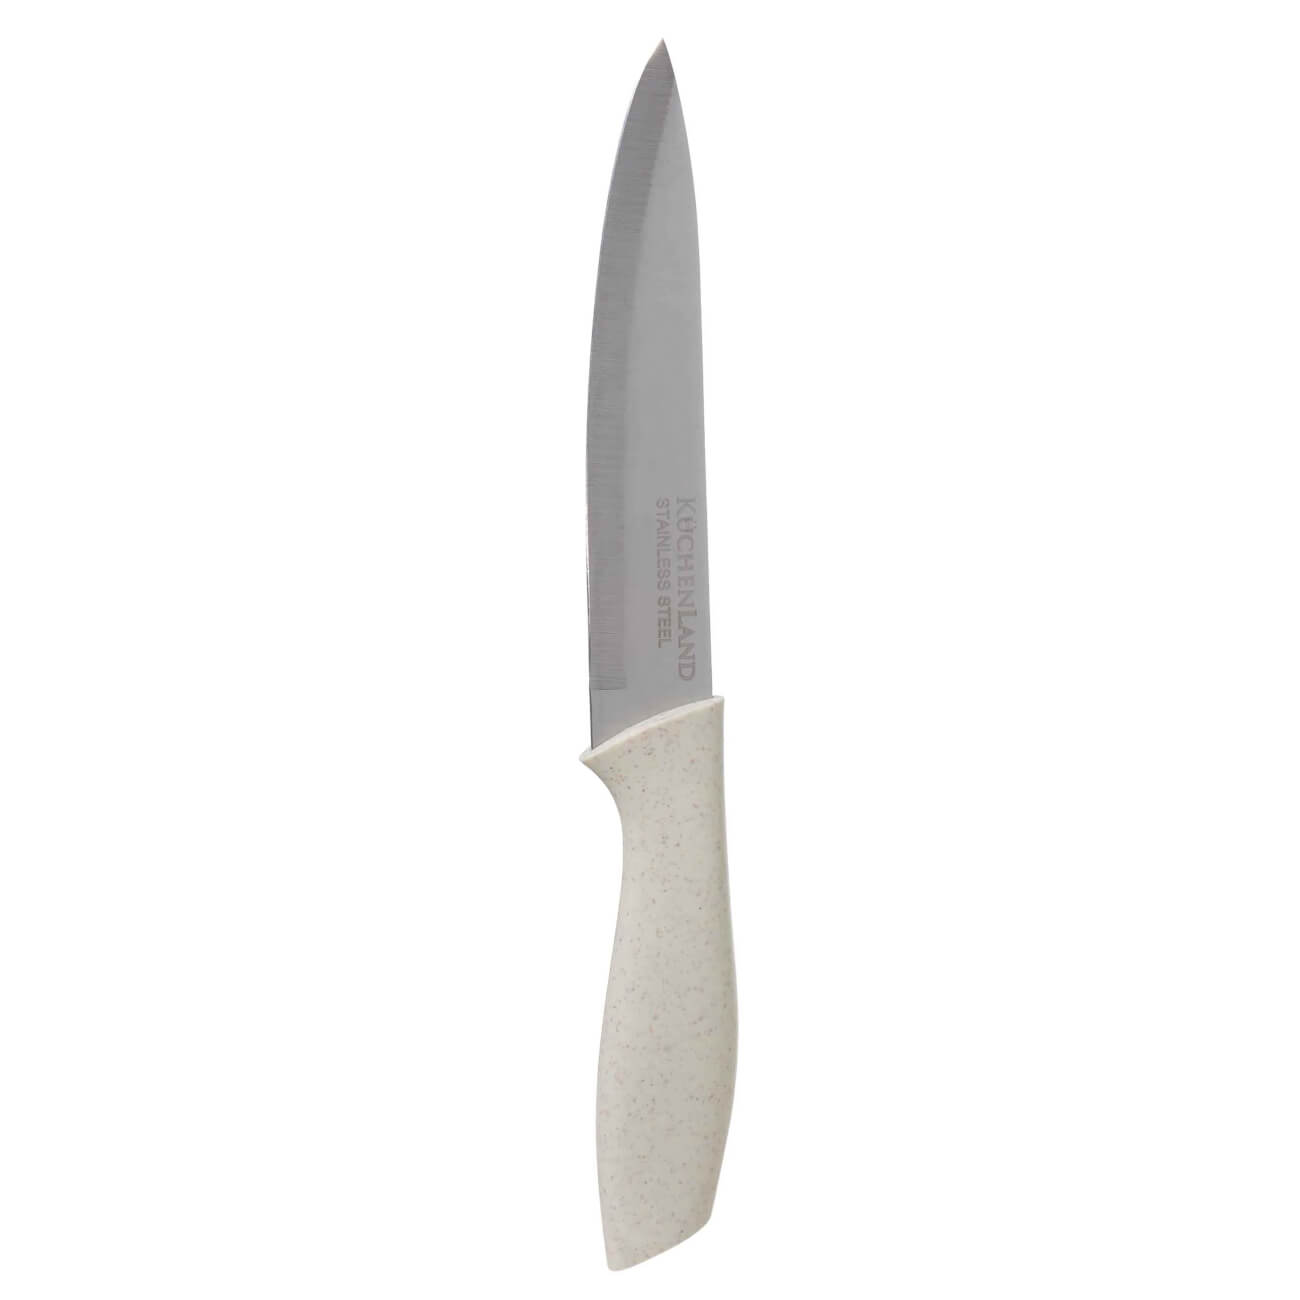 Нож для нарезки, 15 см, сталь/пластик, молочный, Speck-light нож для нарезки henckels 31020 161